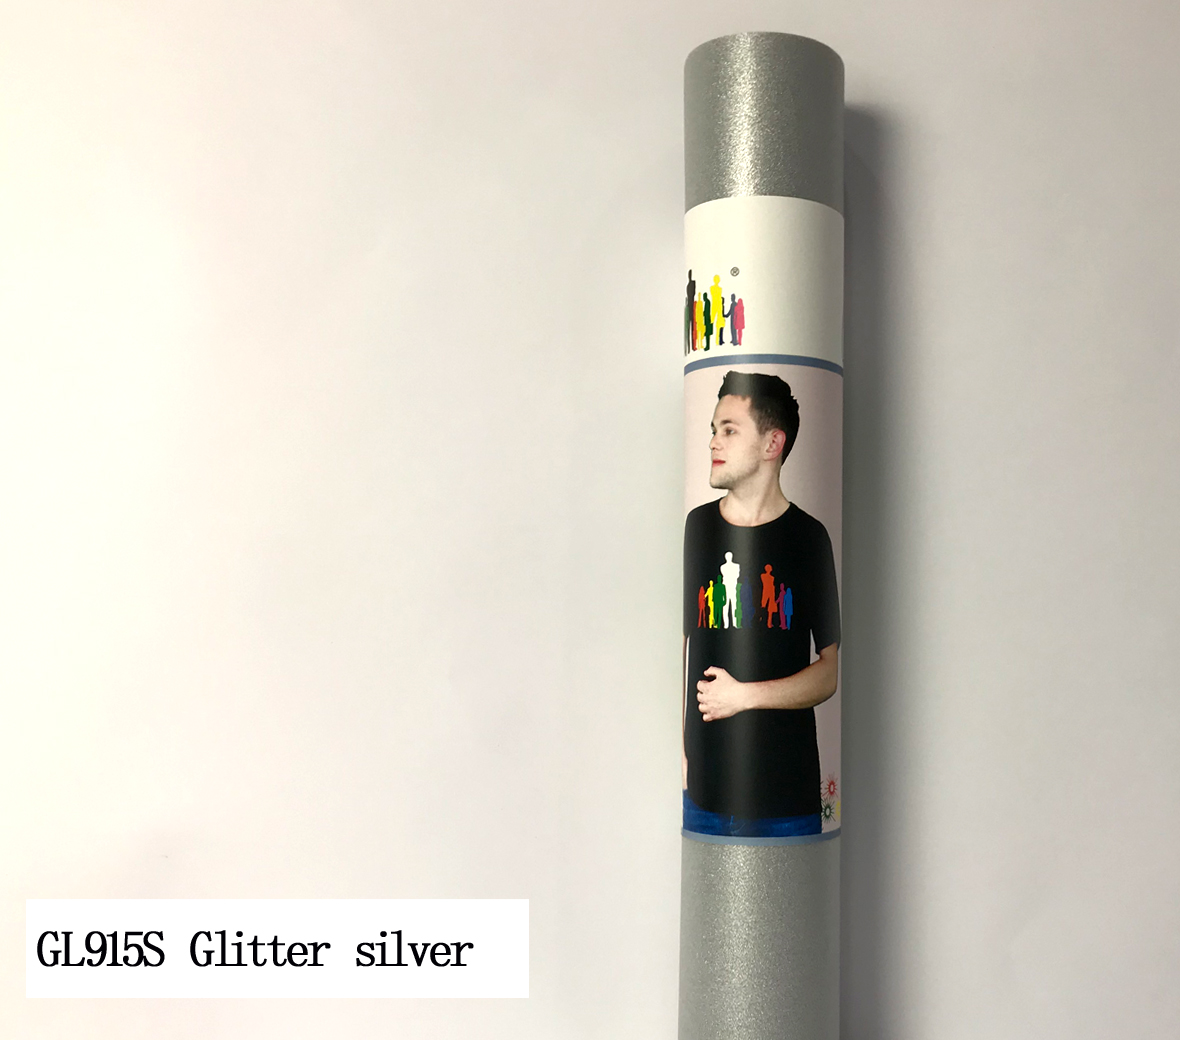 GL915S-Glitter-silver